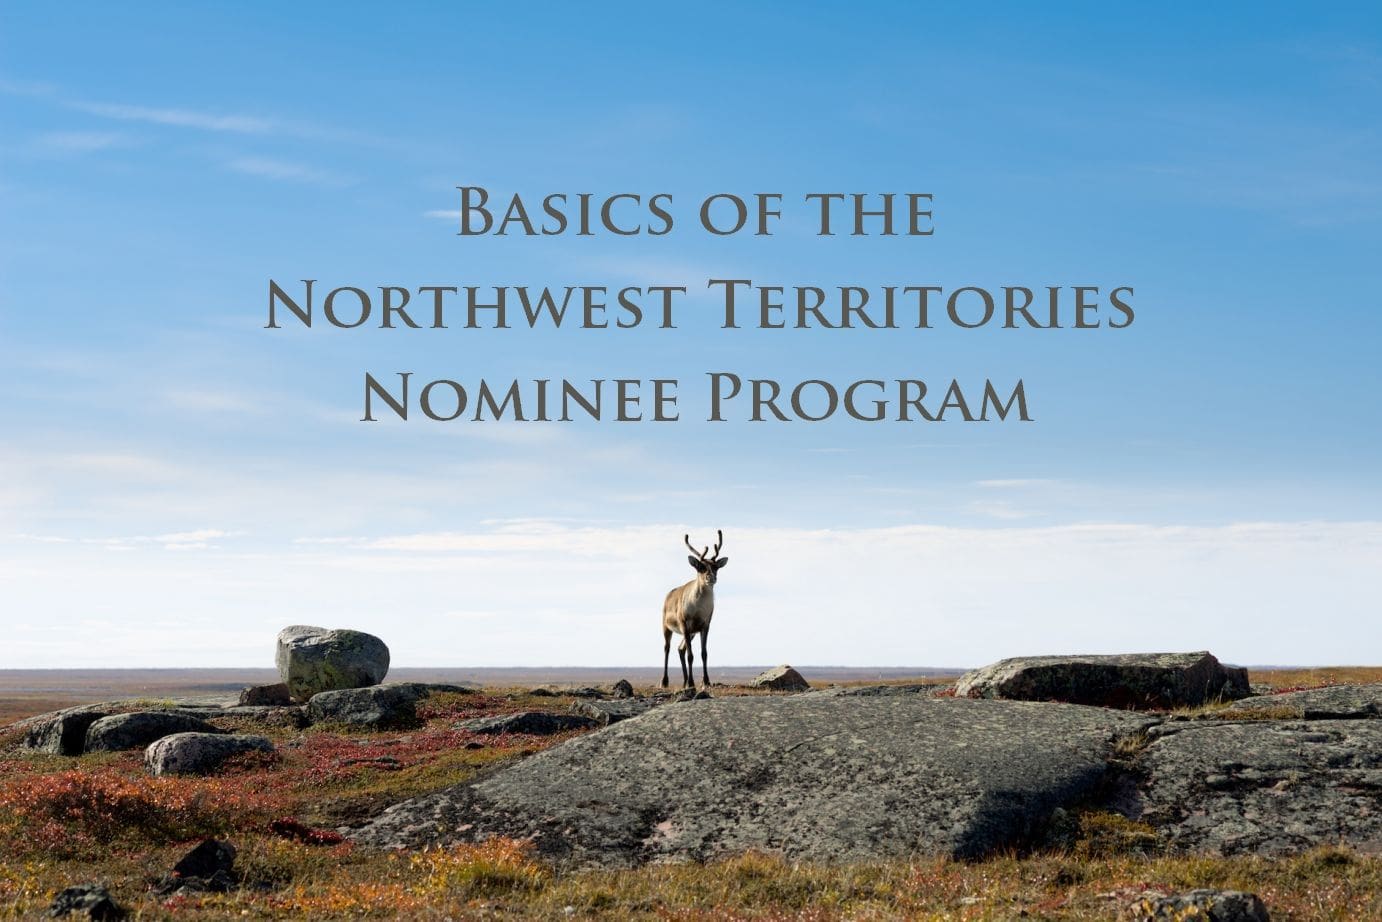 Basics-of-the-Northwest-Territories-Nominee-Program.jpg